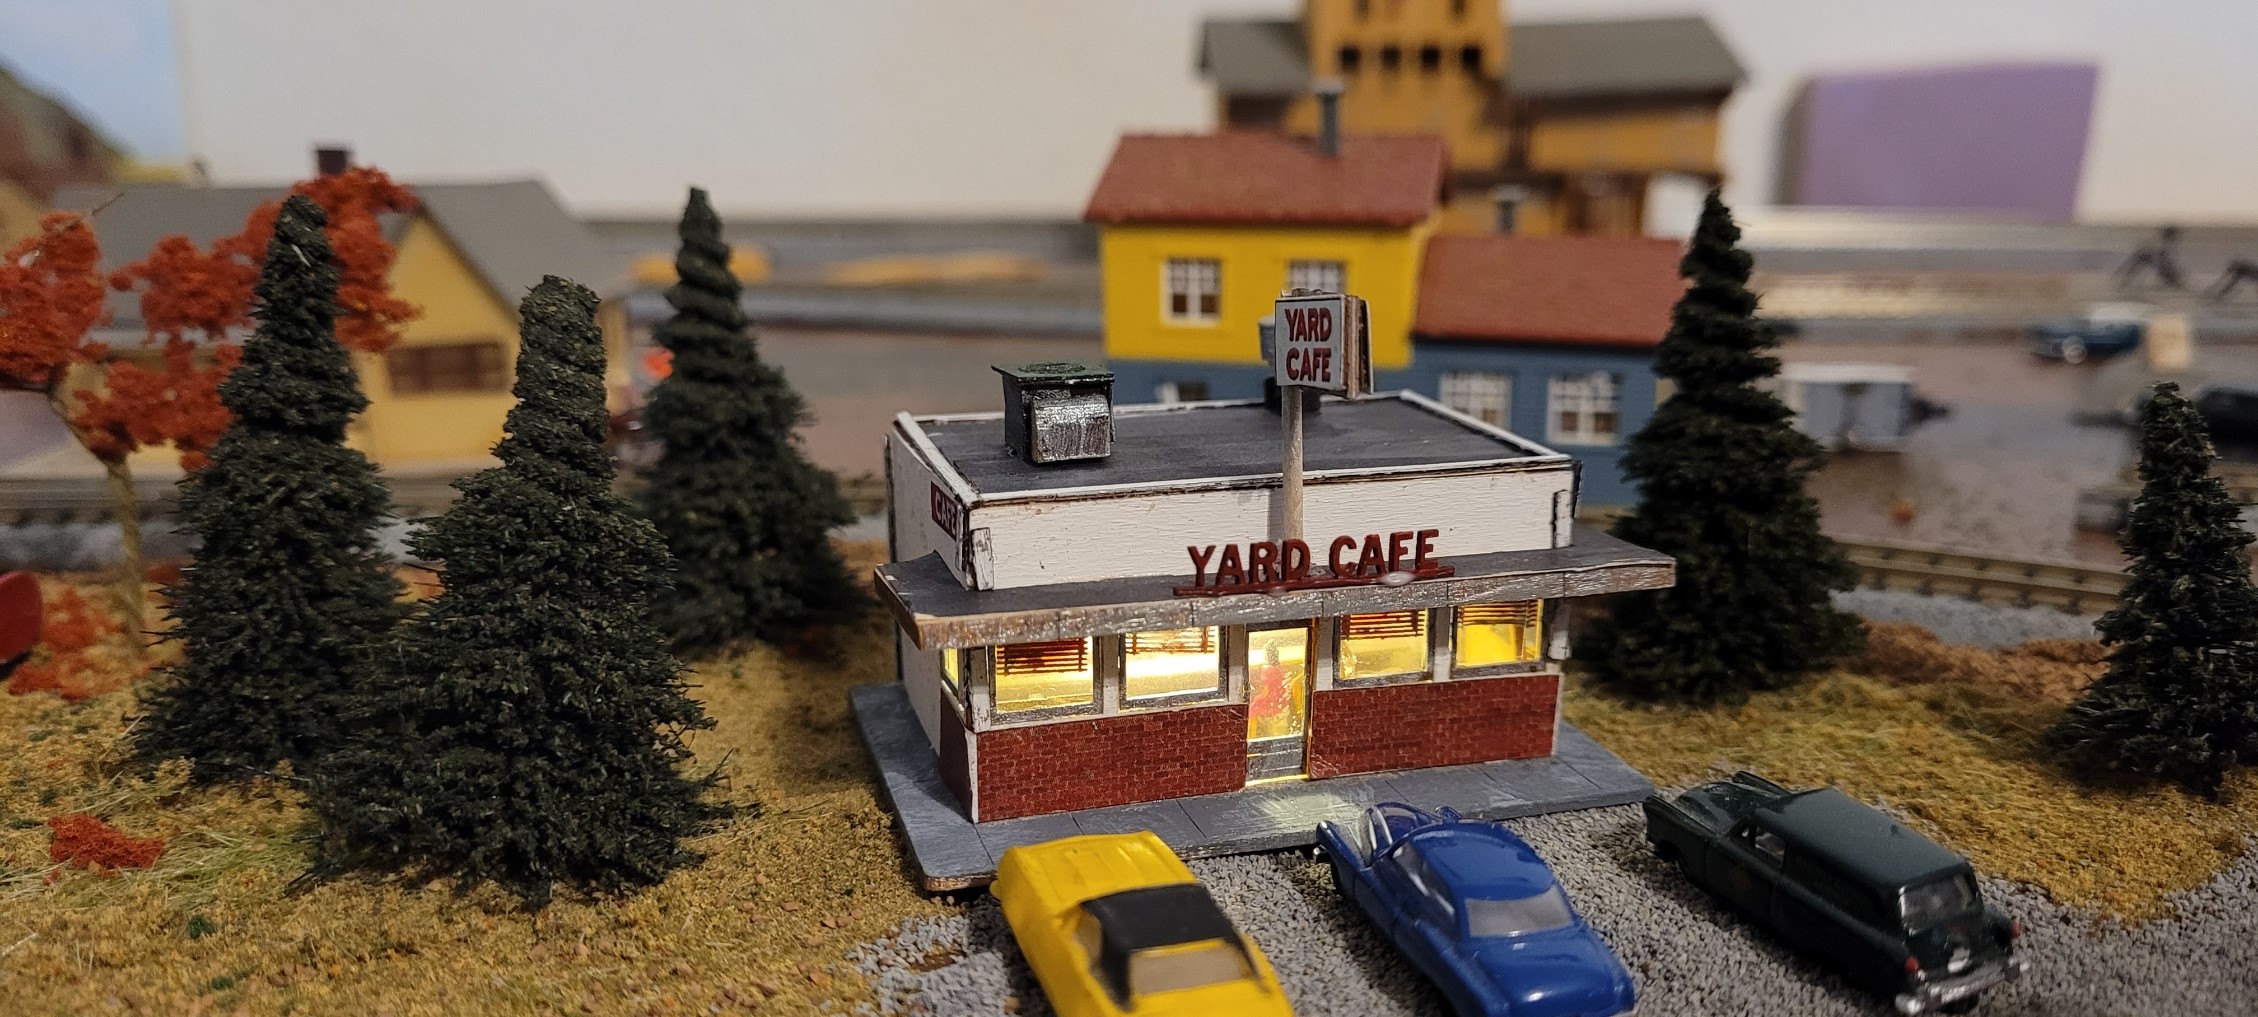 Yard Cafe.jpg